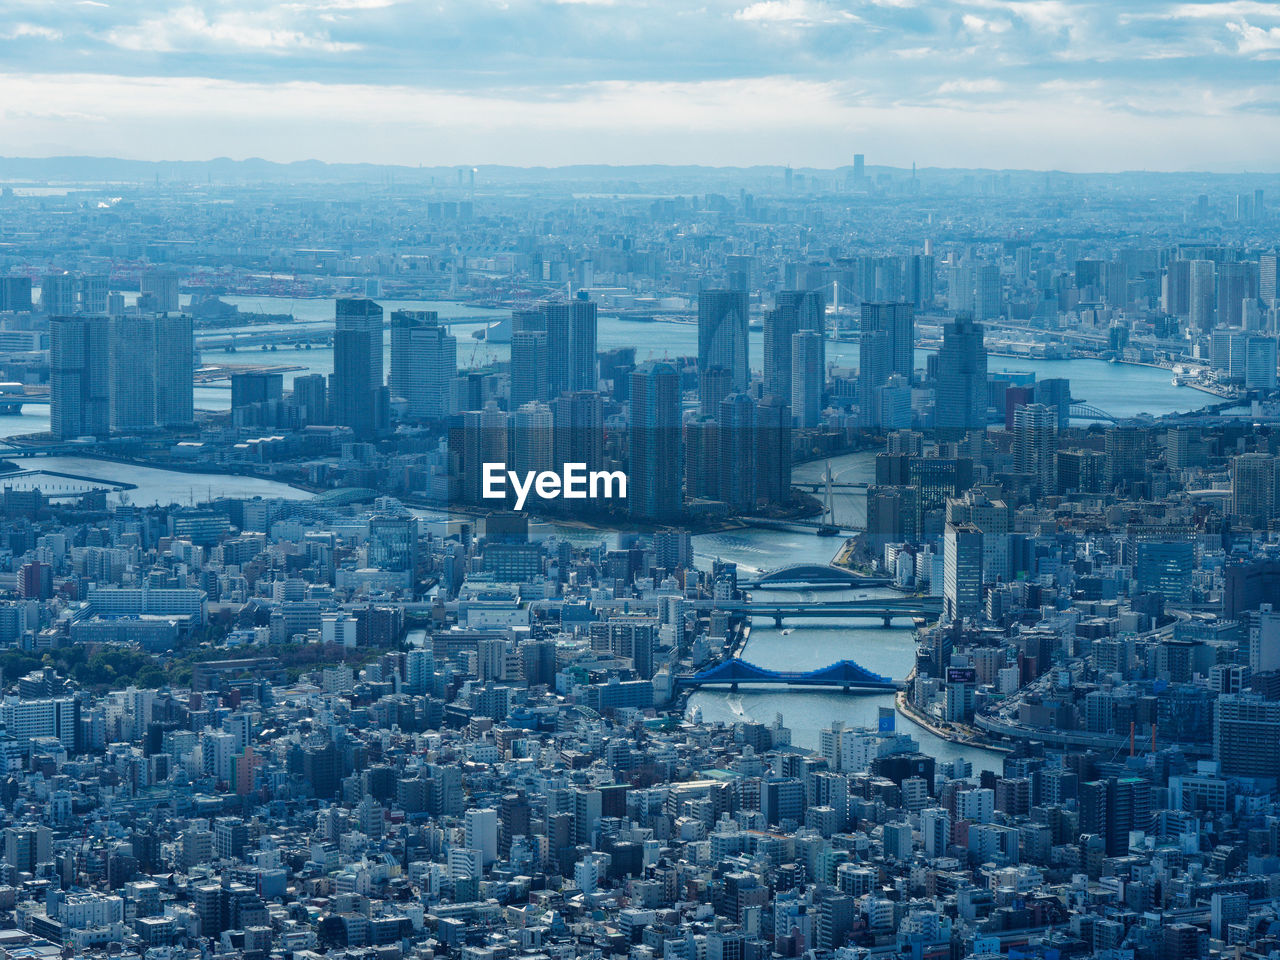 Tokyo skyline. 